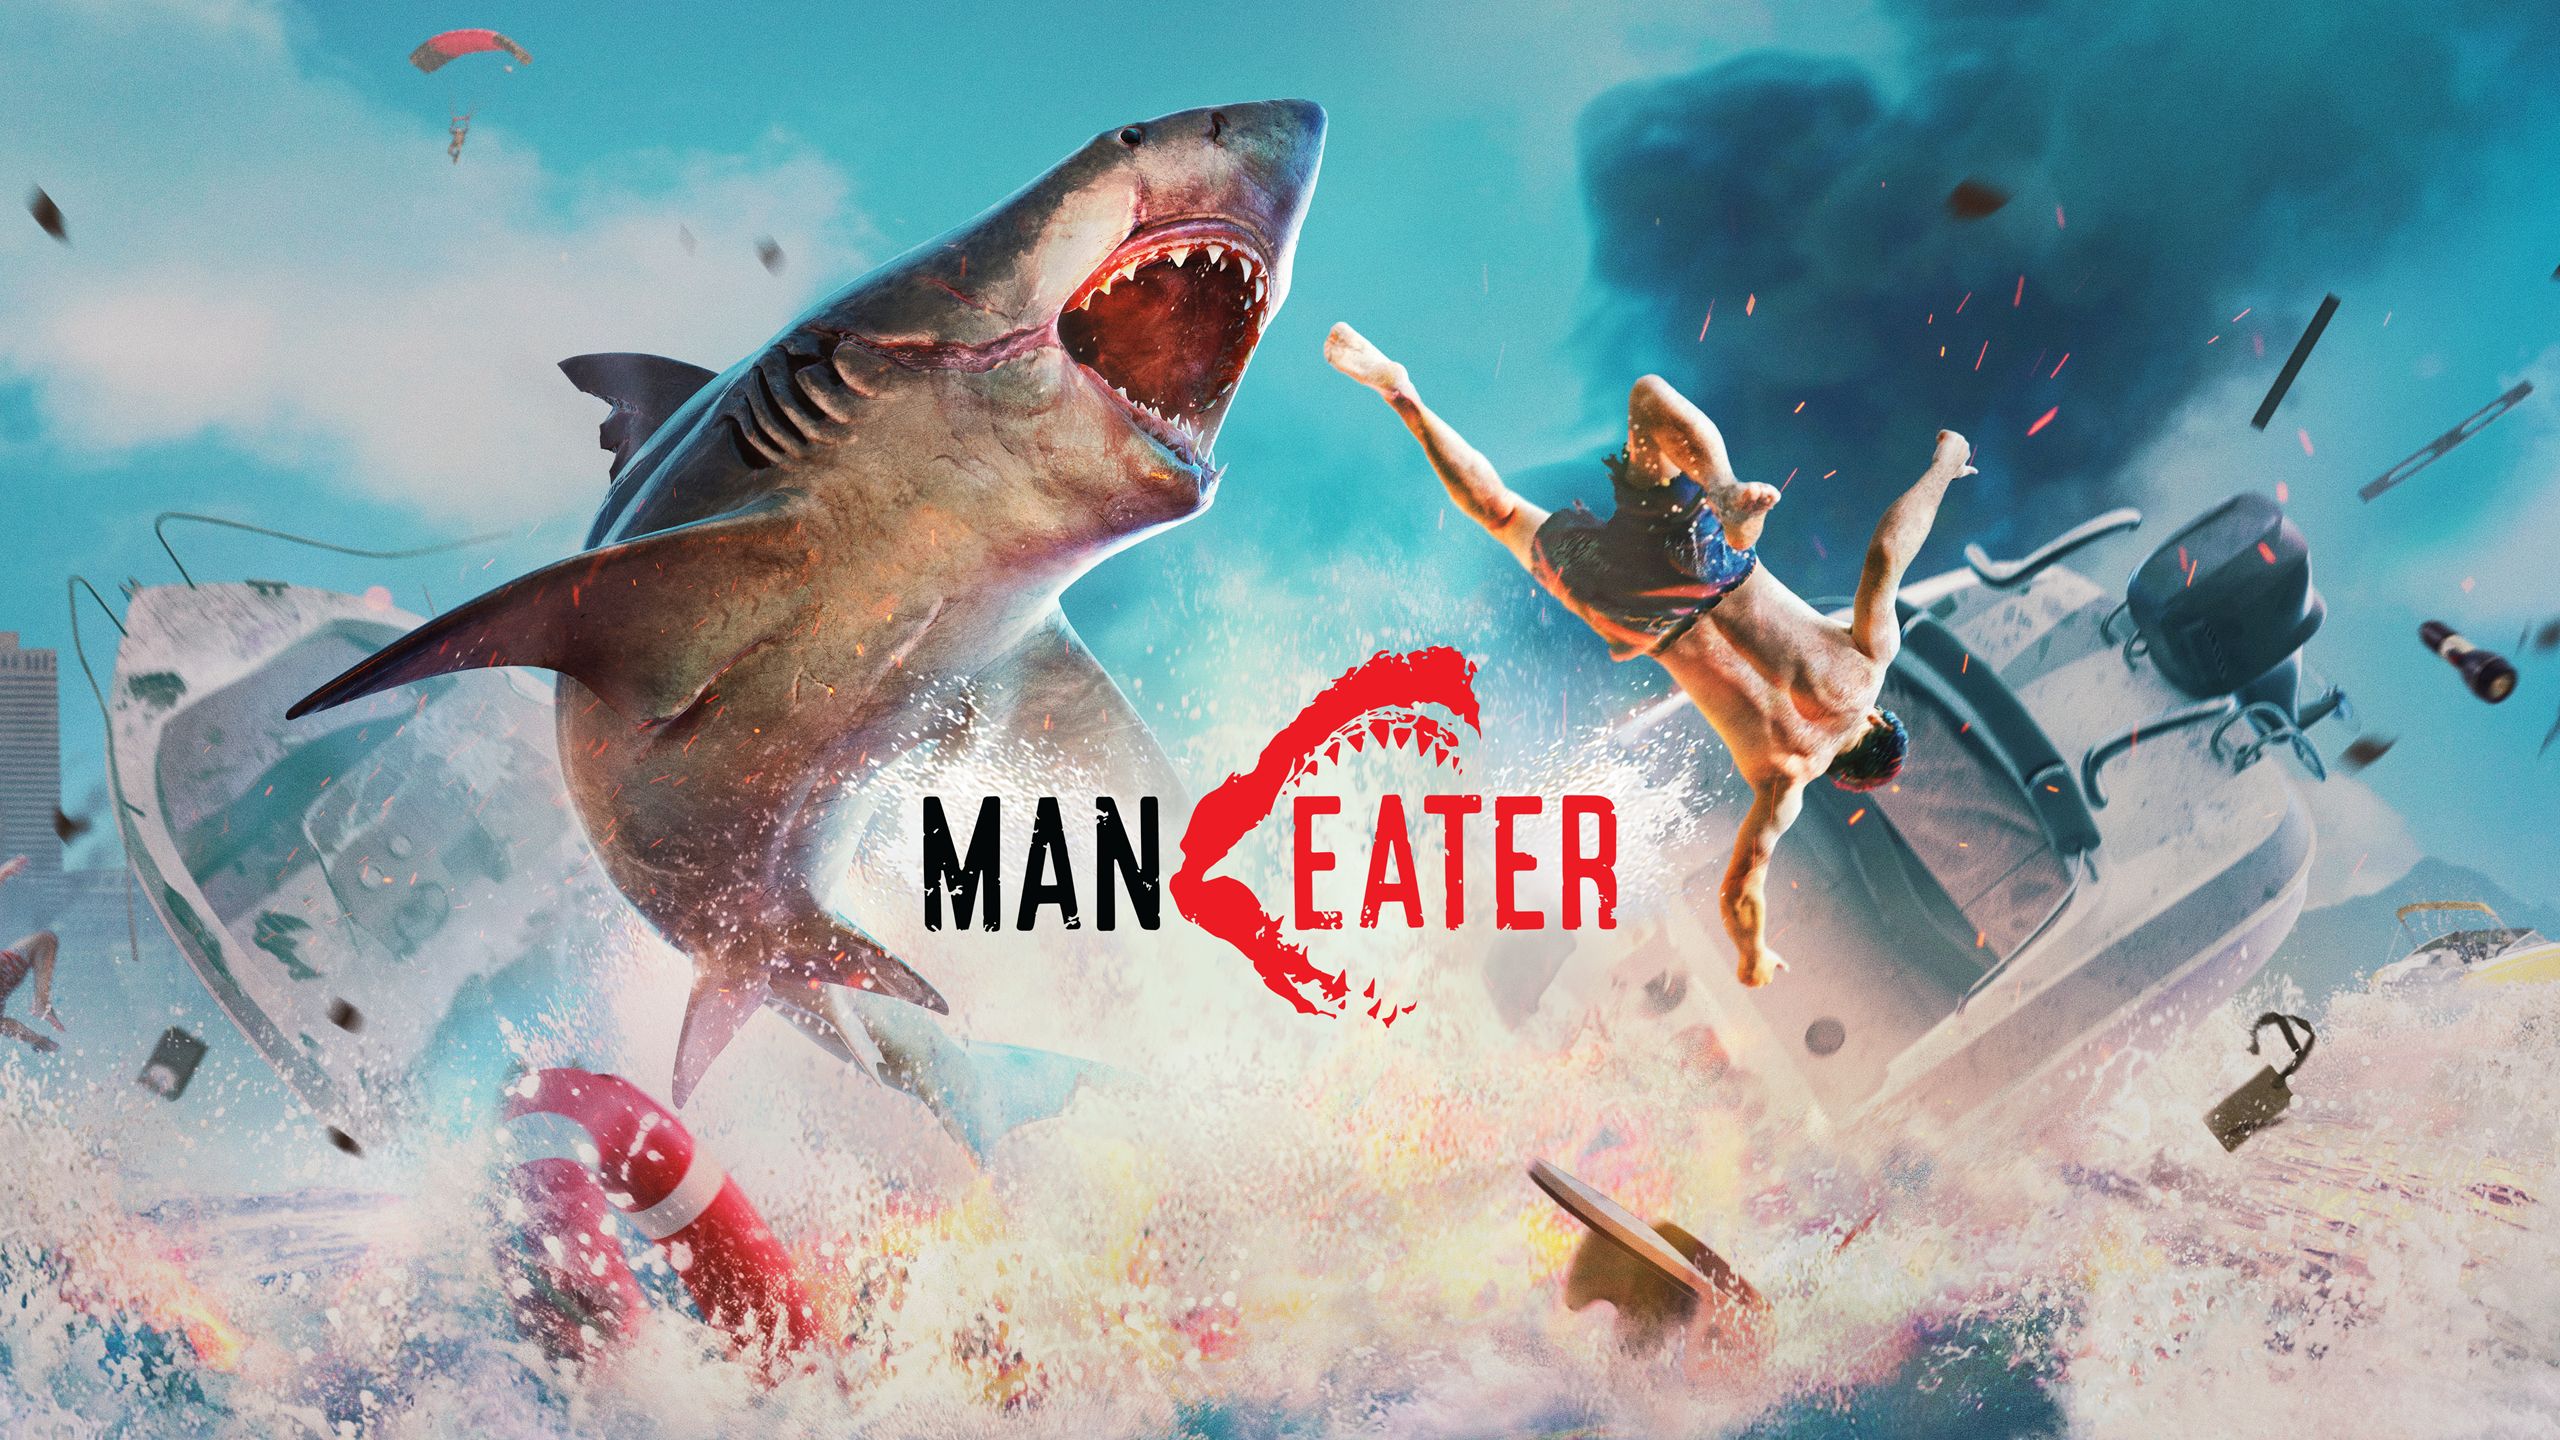 Maneater - kolejna darmowa gra w Epic Games Store